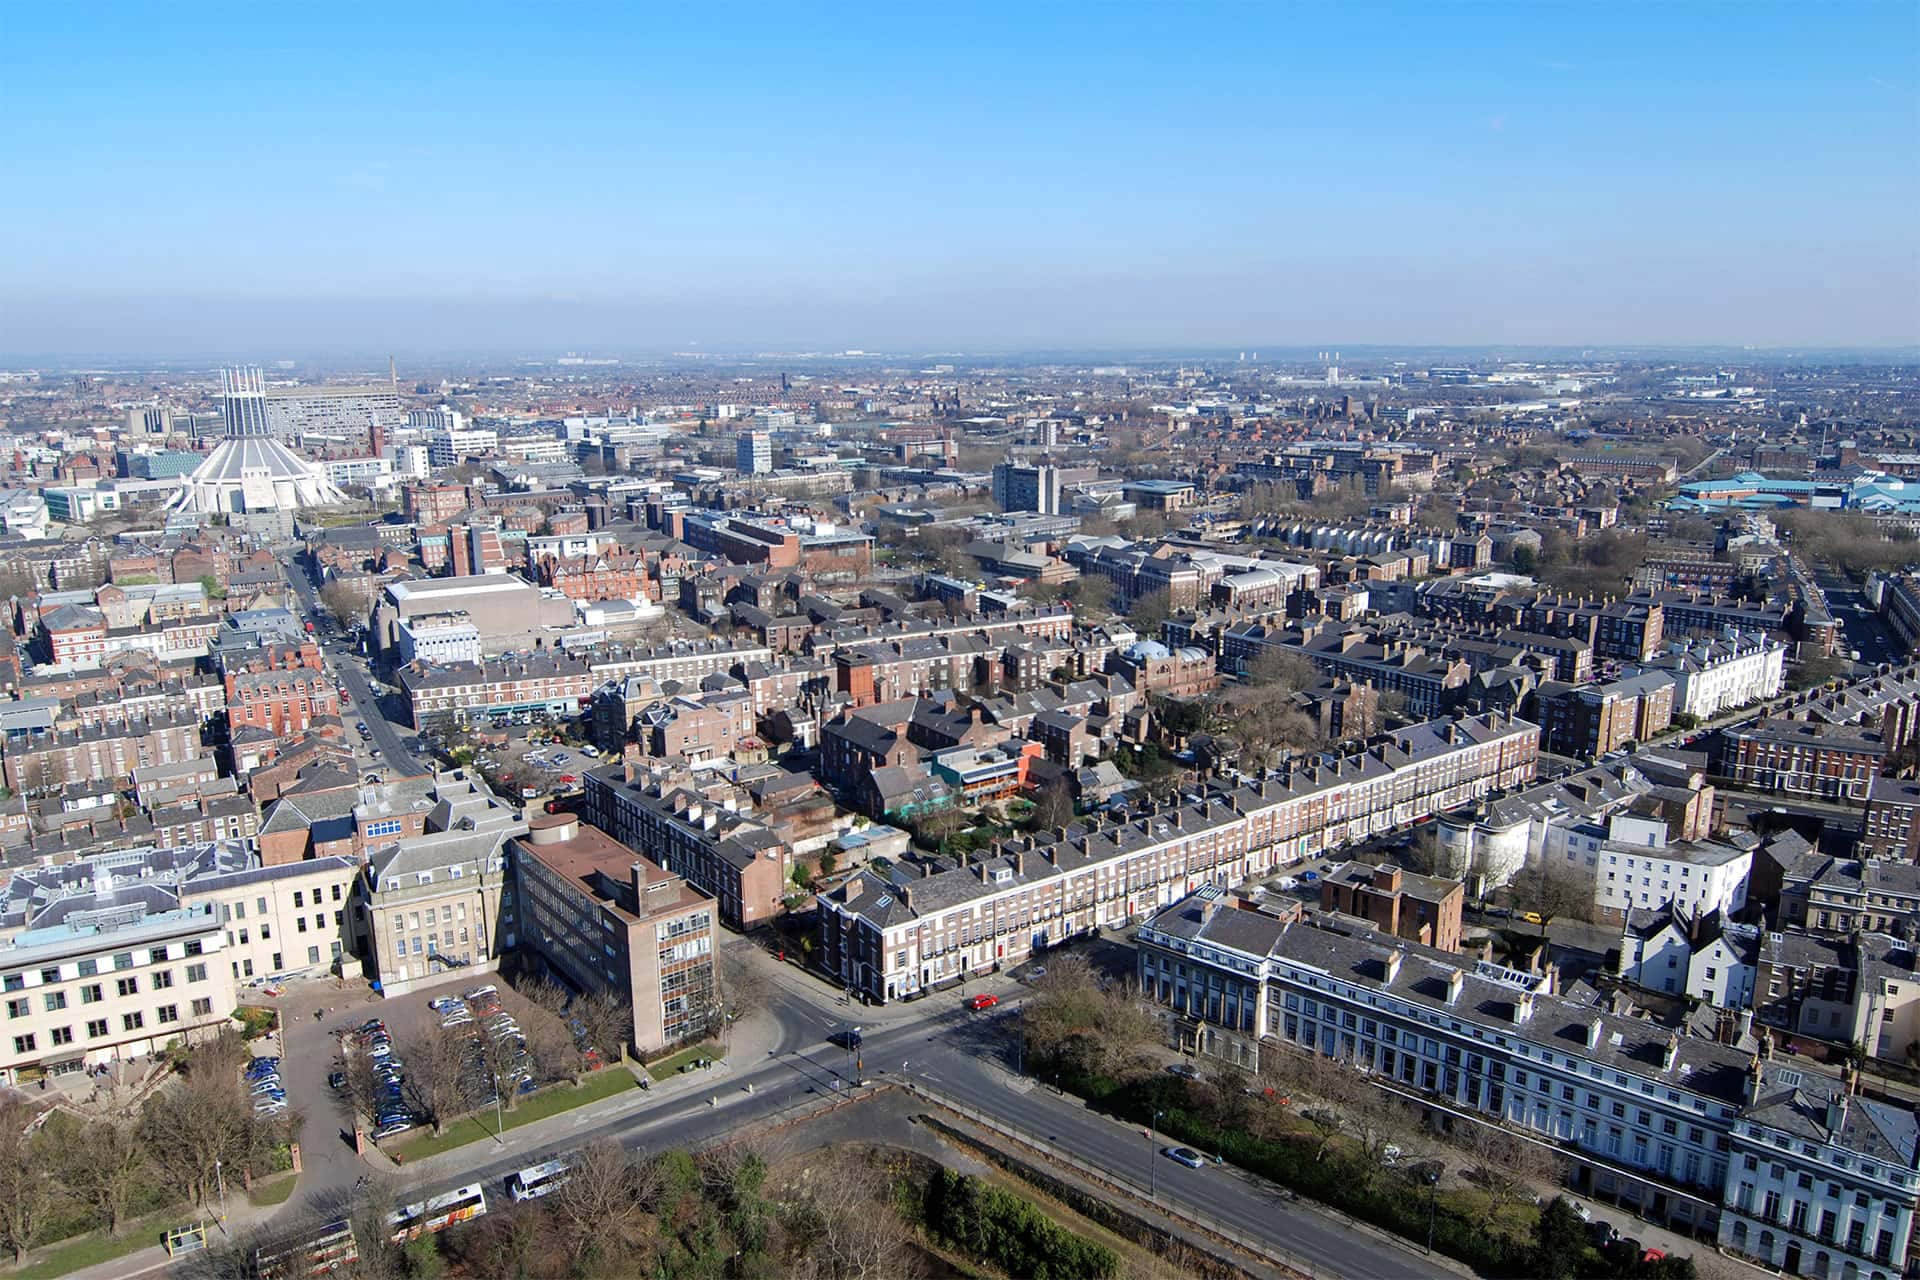 Aerial shot of Liverpool city centre